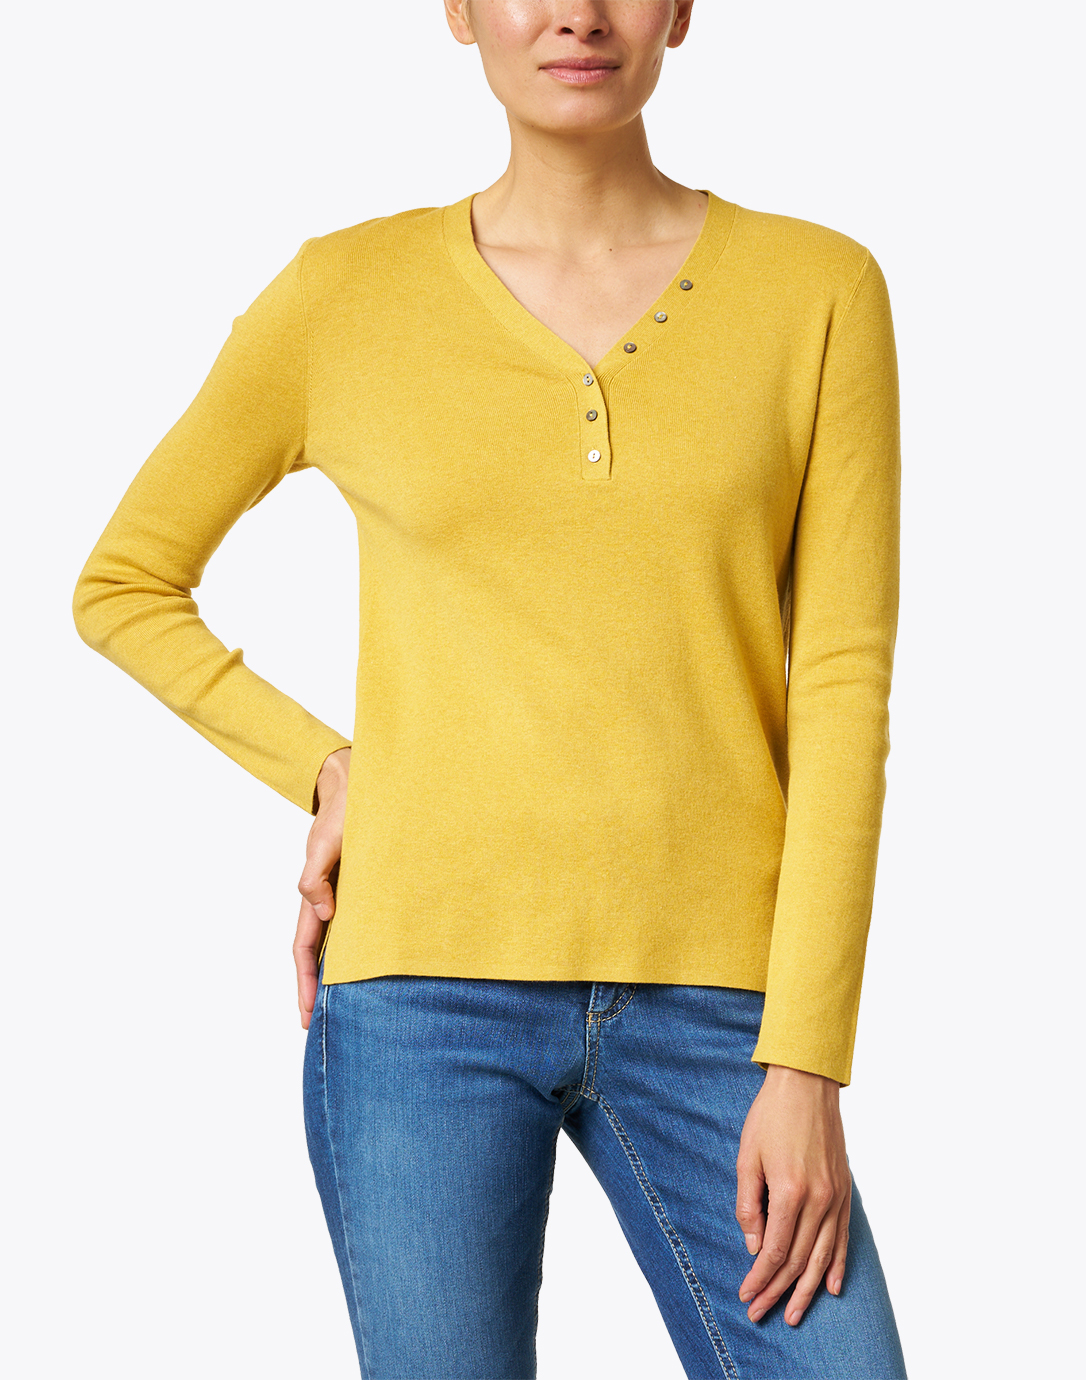 Yellow Intarsia Linen Cotton Sweater